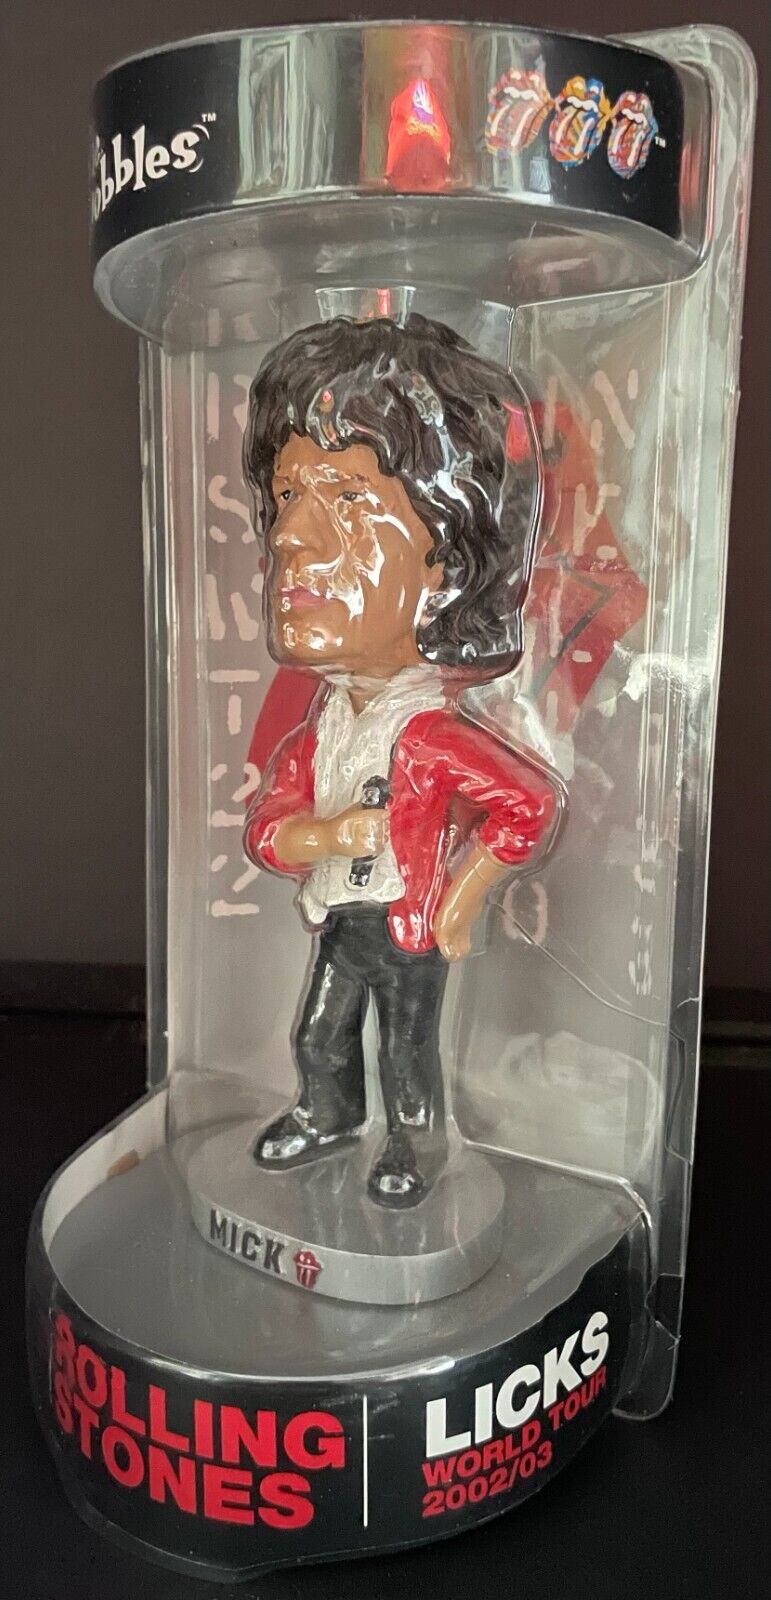 2002-03 Rolling Stones Mick Jagger Bobblehead Licks World Tour Bobble Dobbles